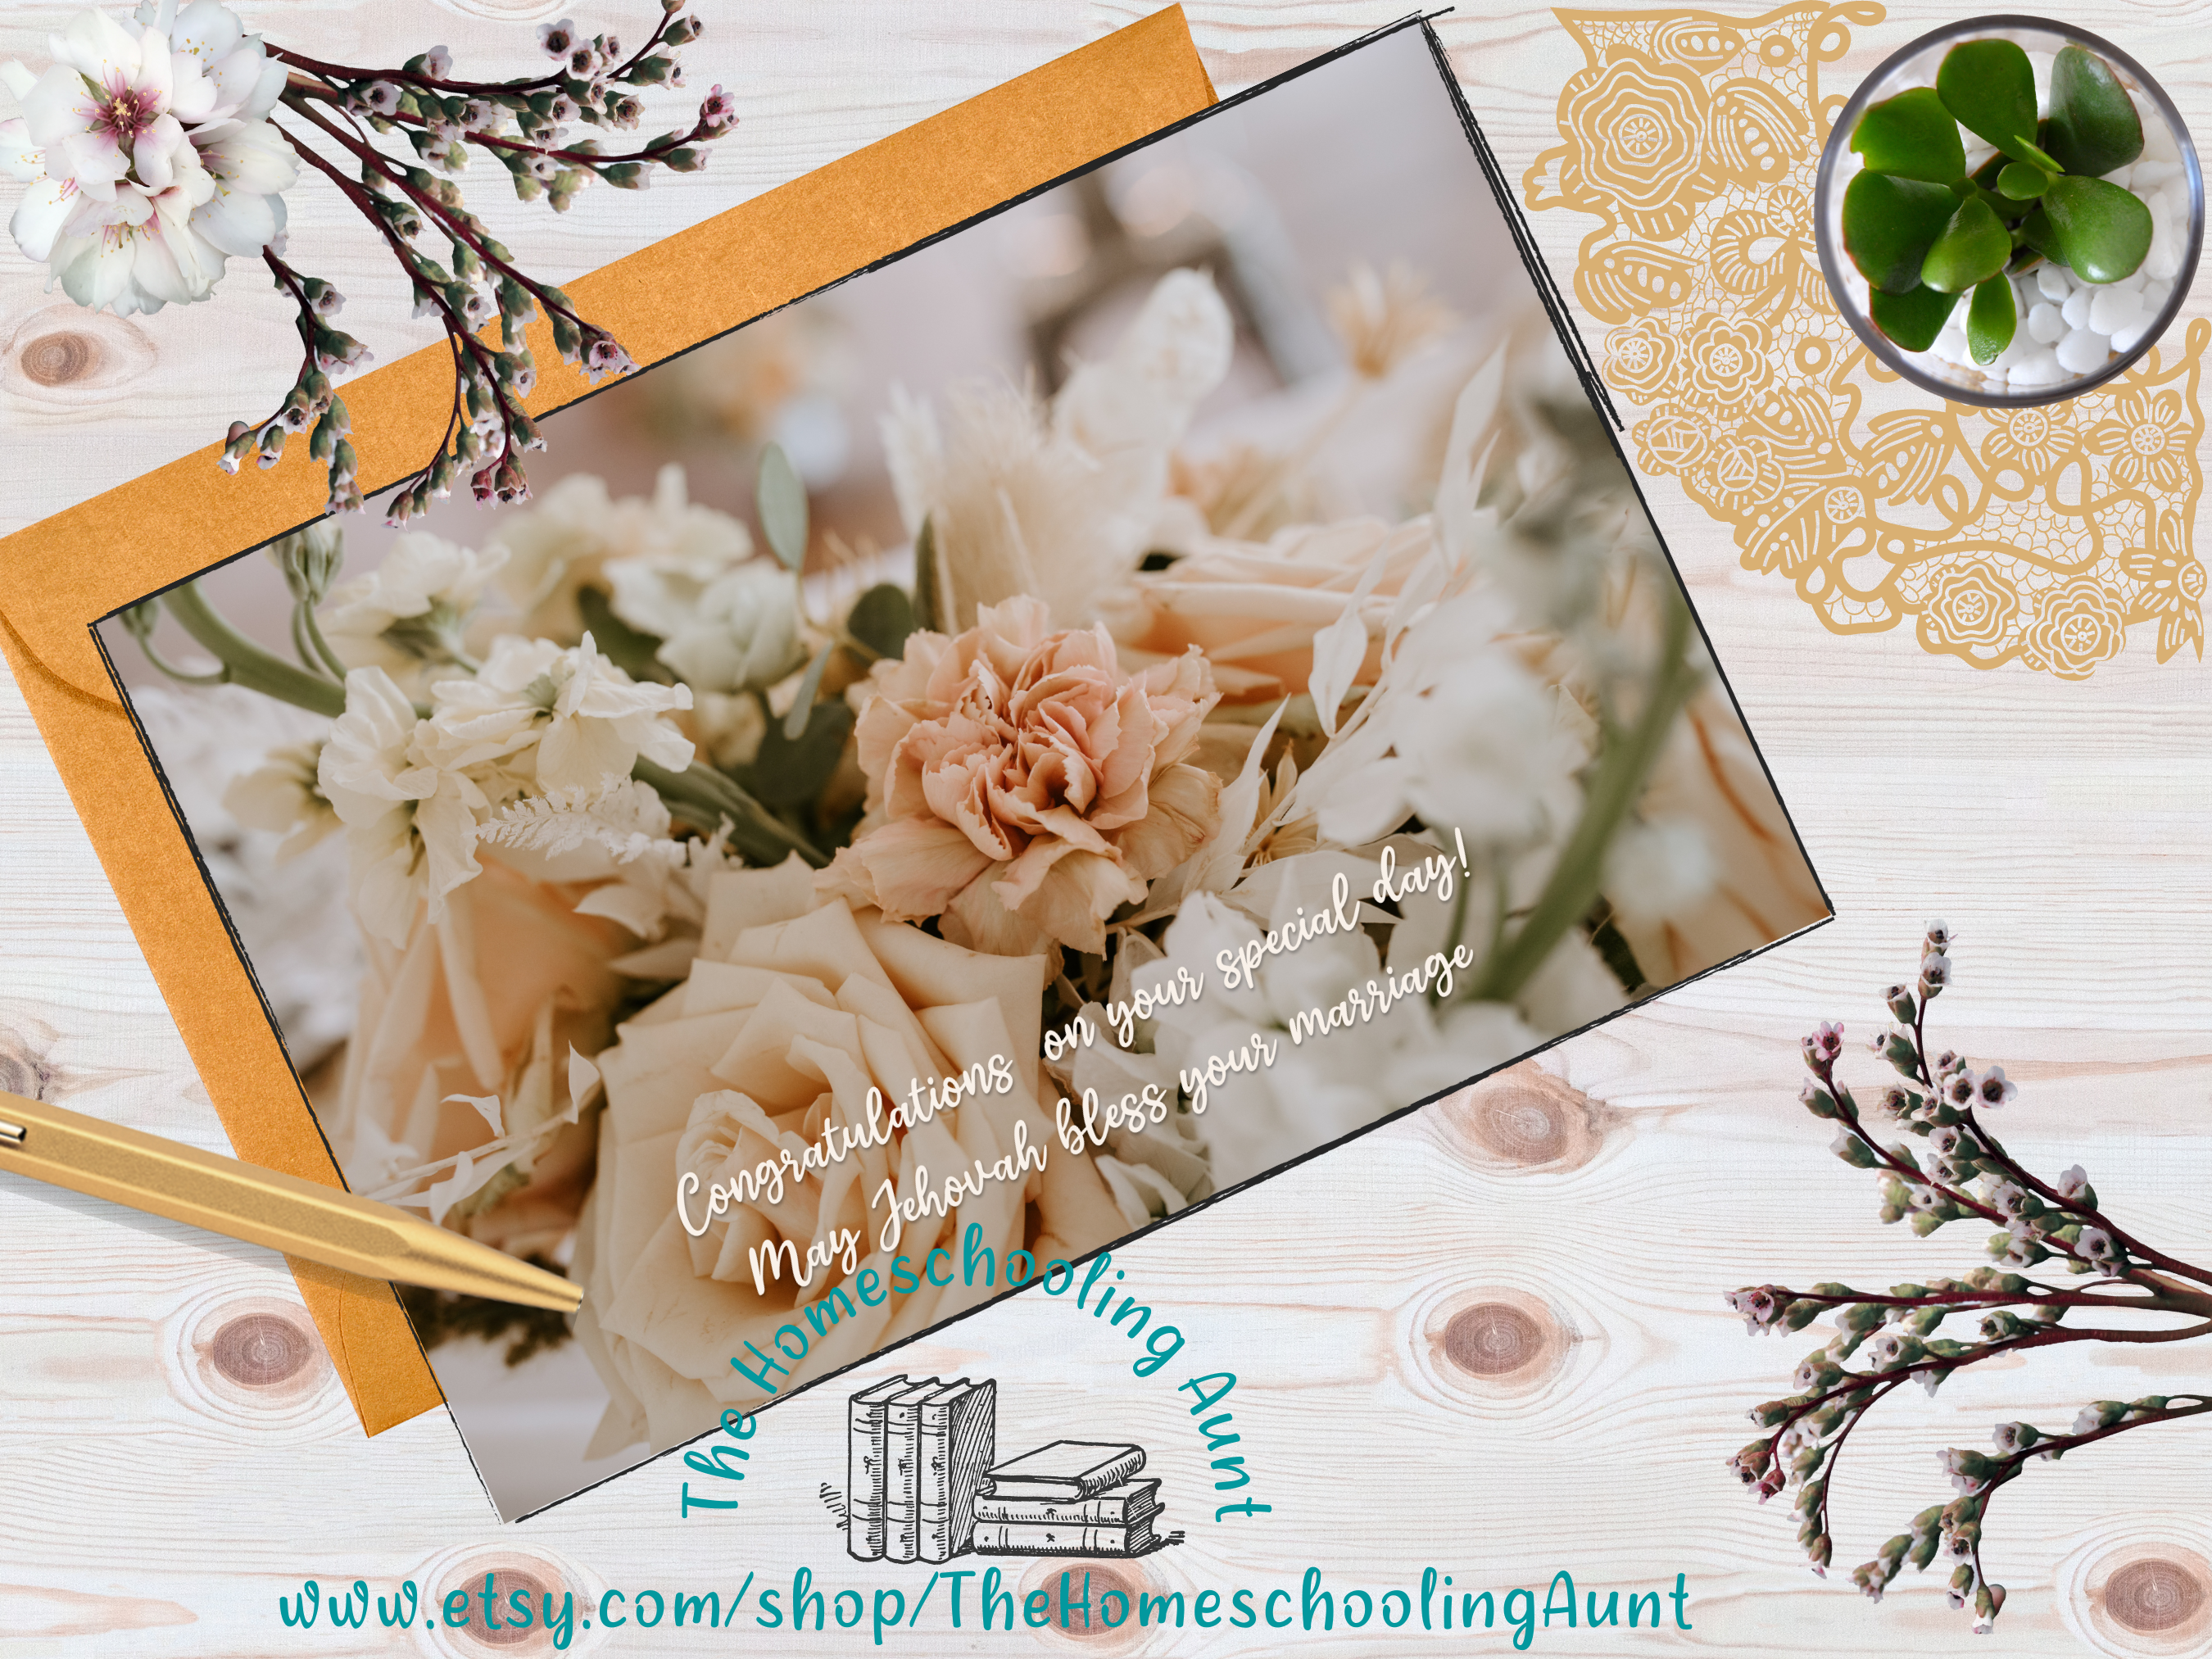 Wedding Gift Hampers for Guests - CV12HD11 • Chocovira Chocolates